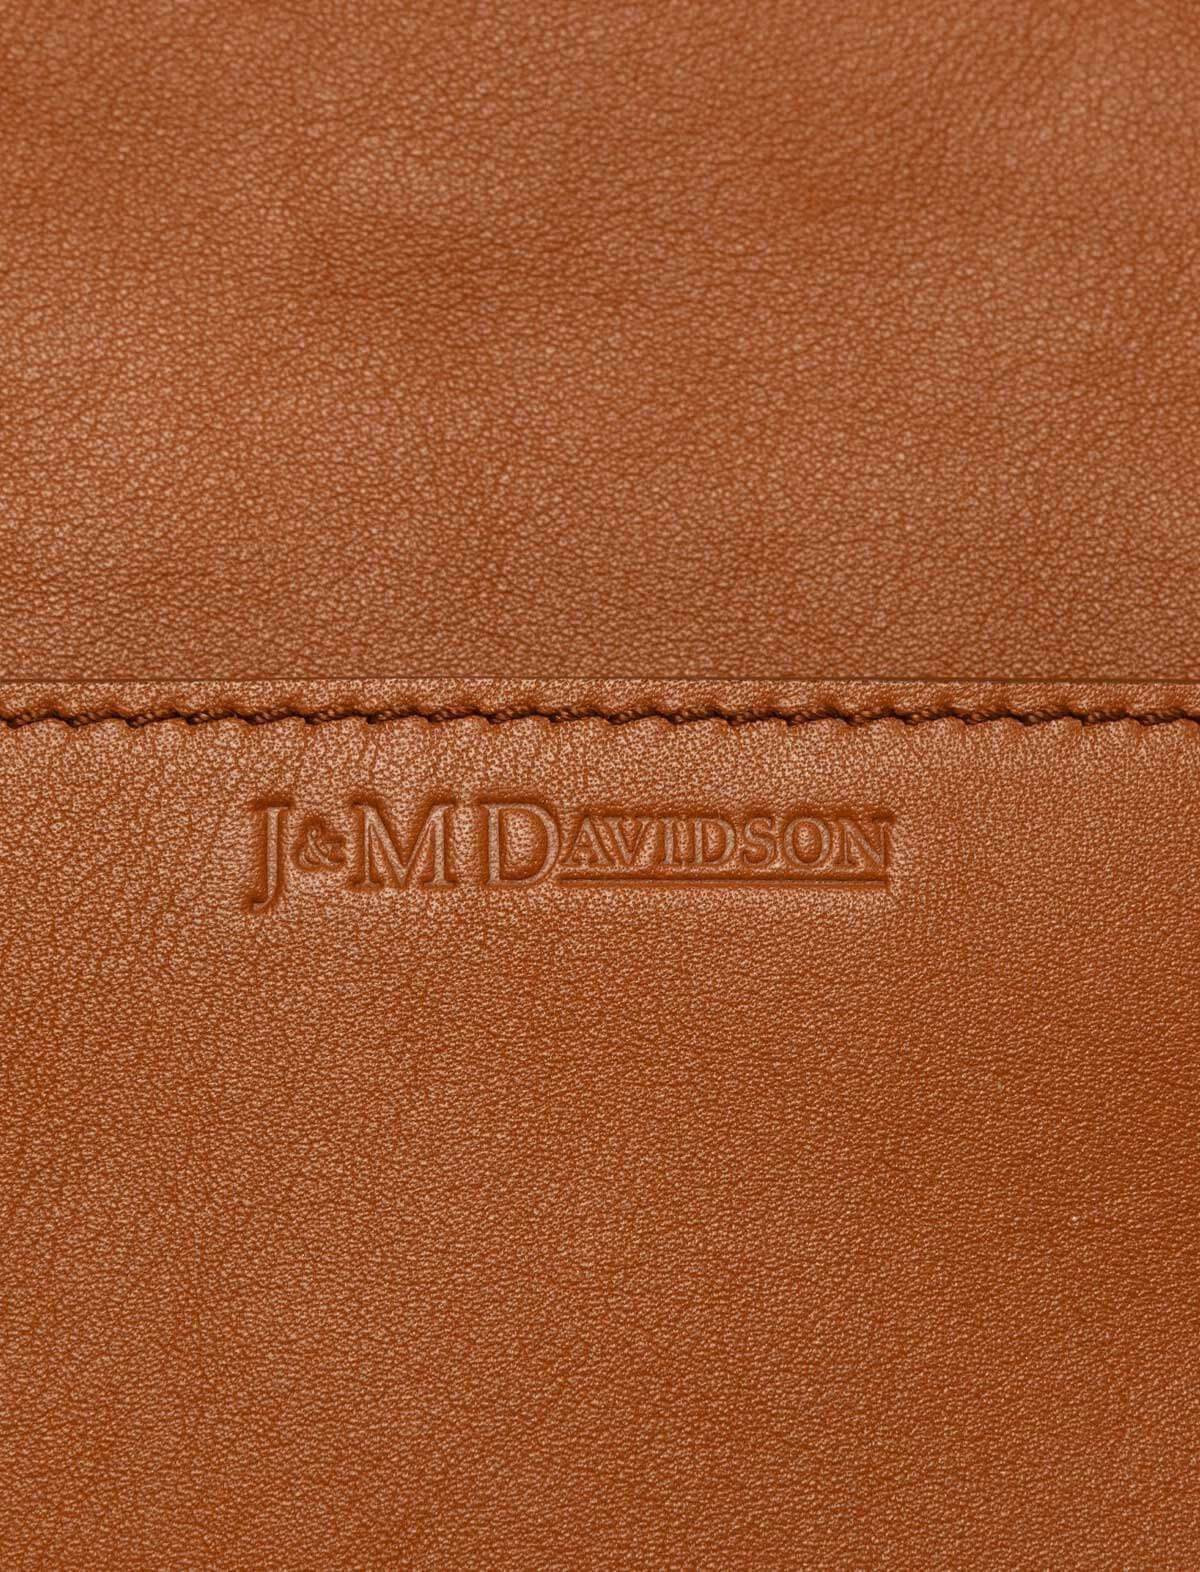 J&M DAVIDSON 2x4 With Studs In Tan | CLOSET Singapore